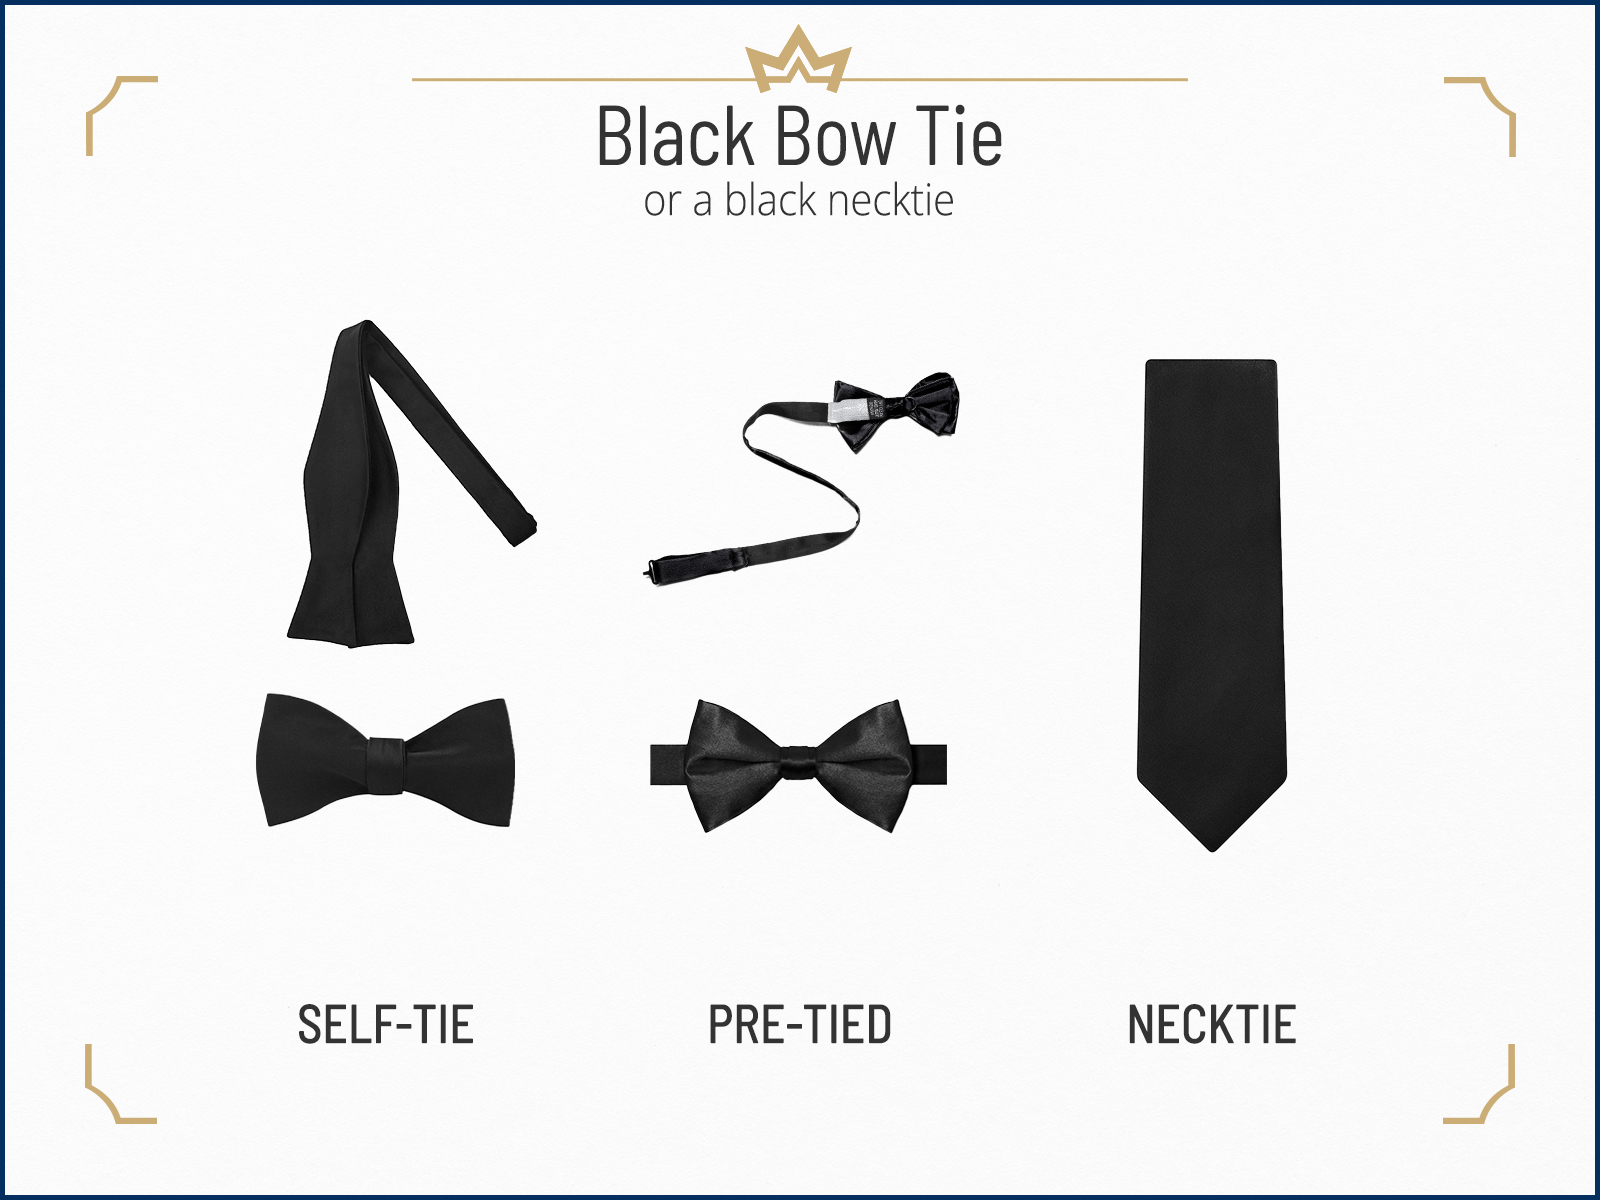 Black bow tie and black tie styles